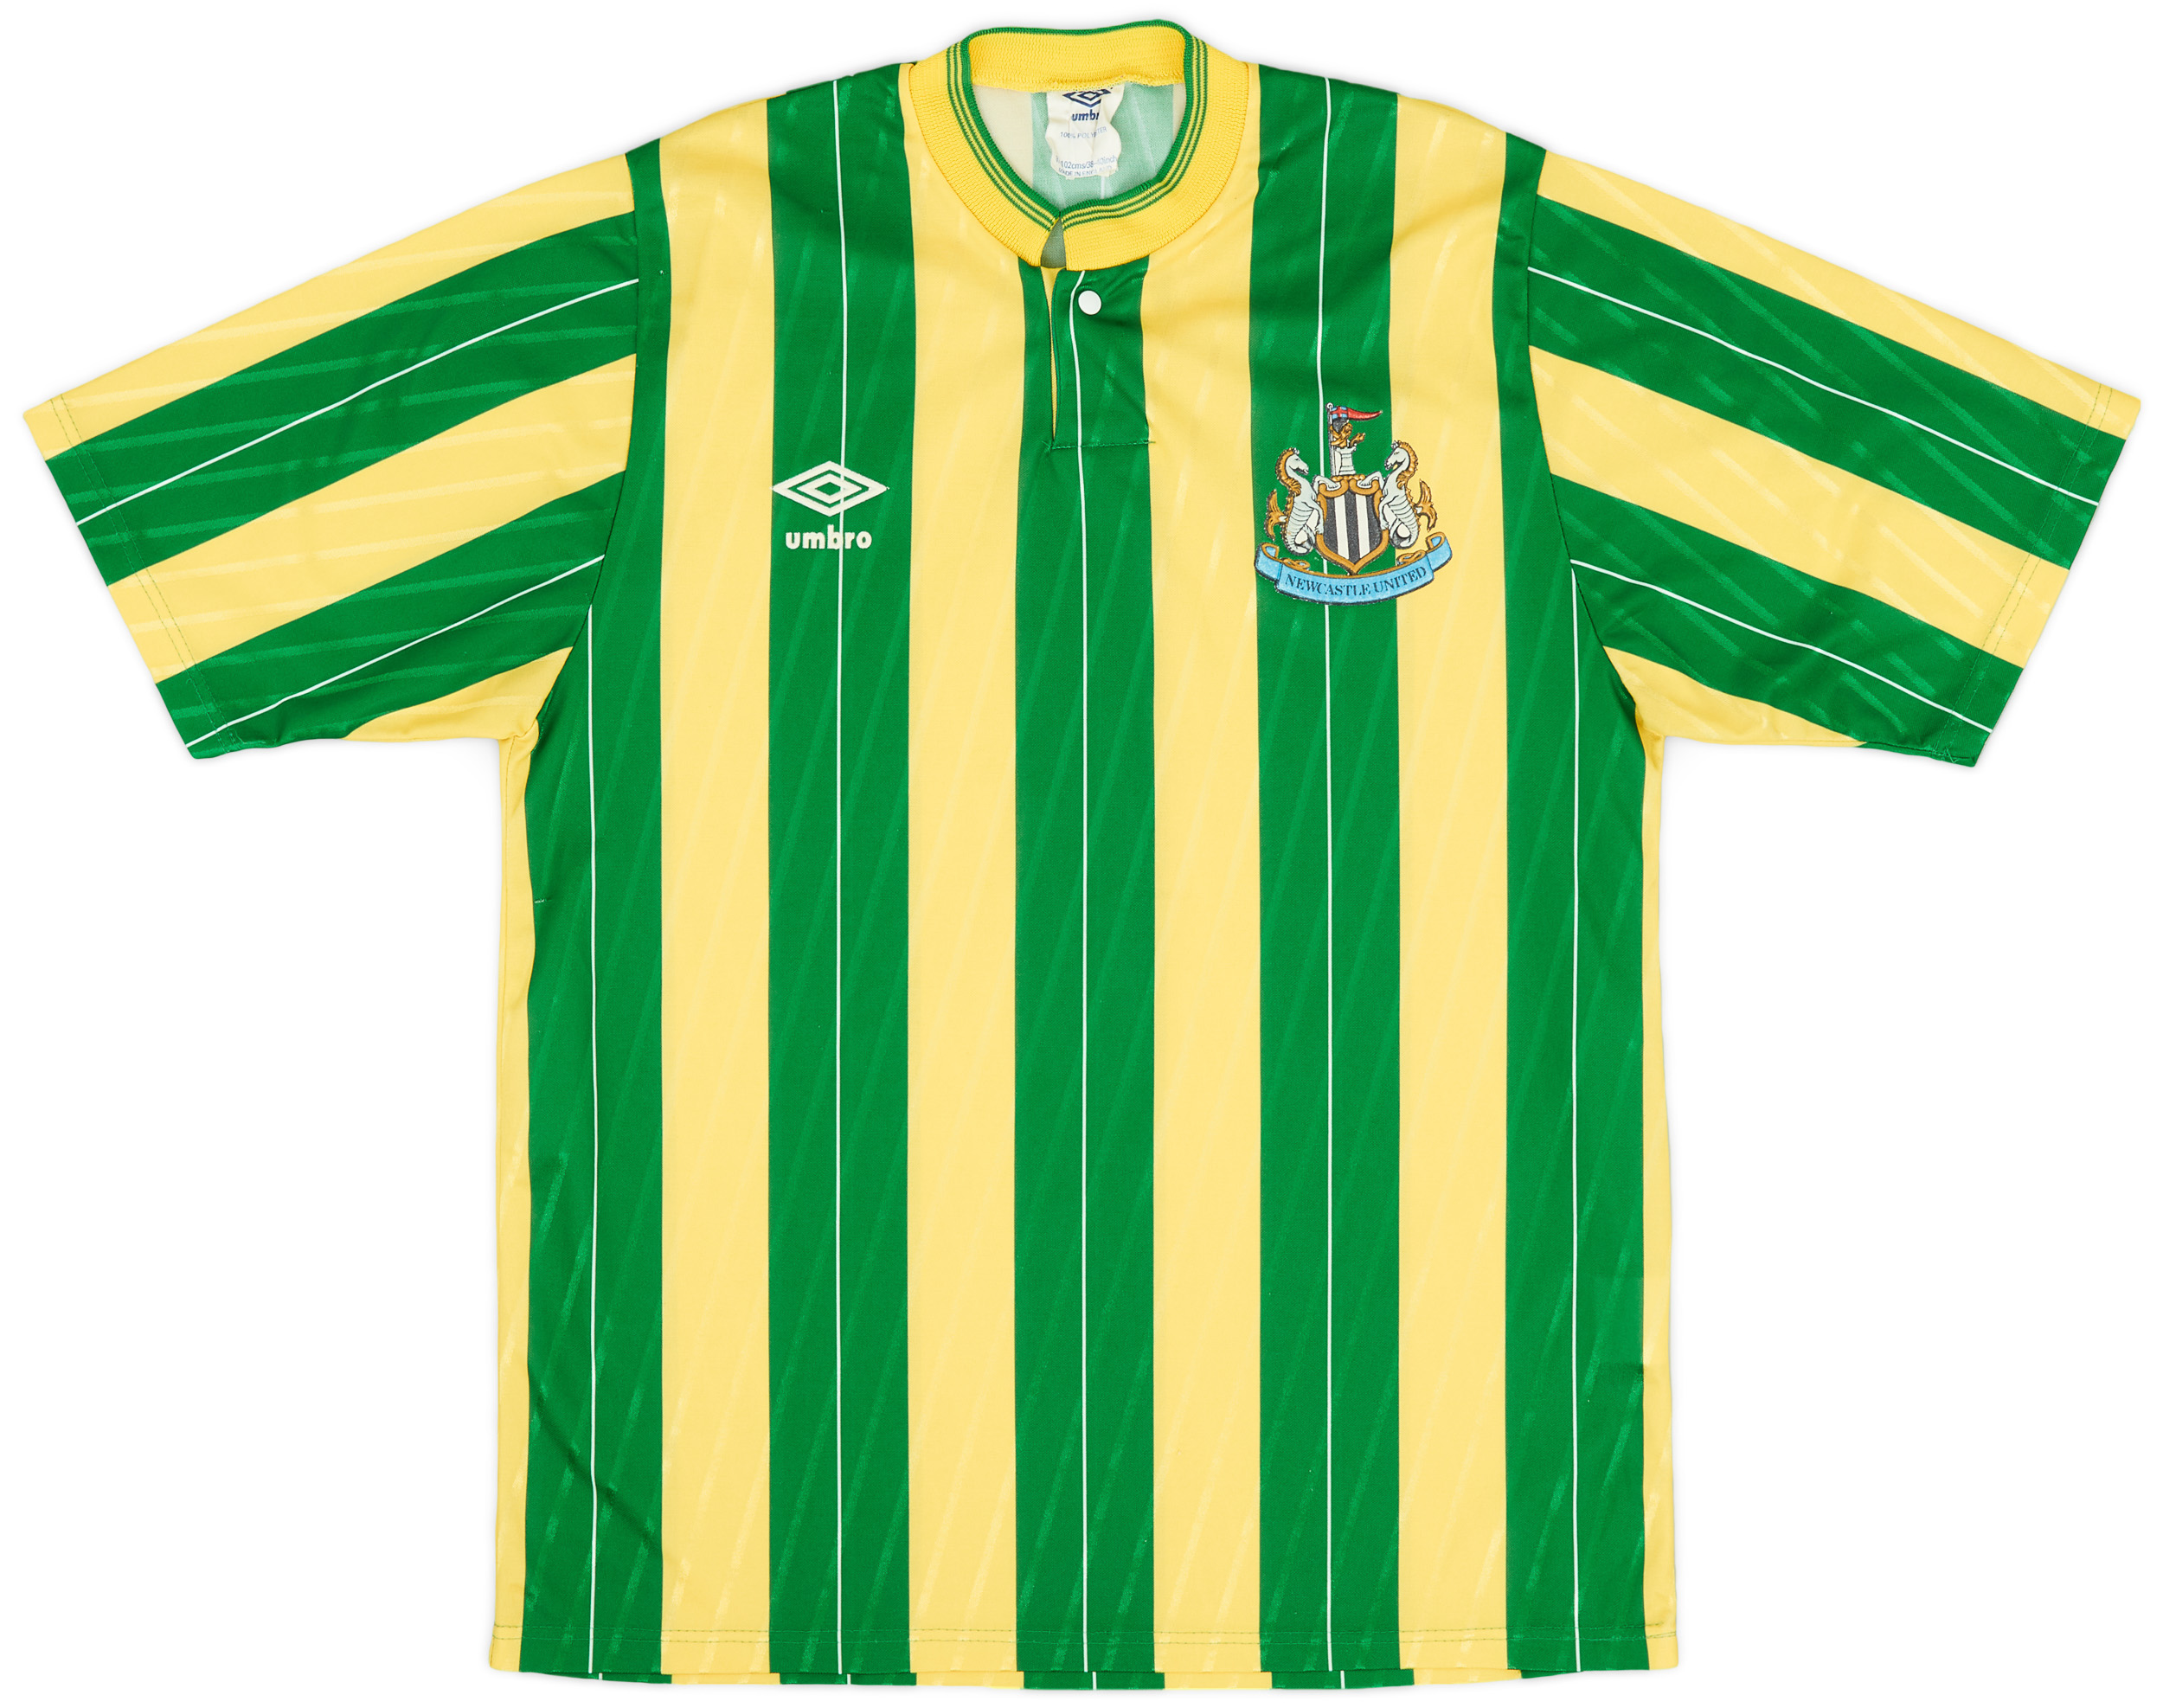 newcastle 1994 shirt